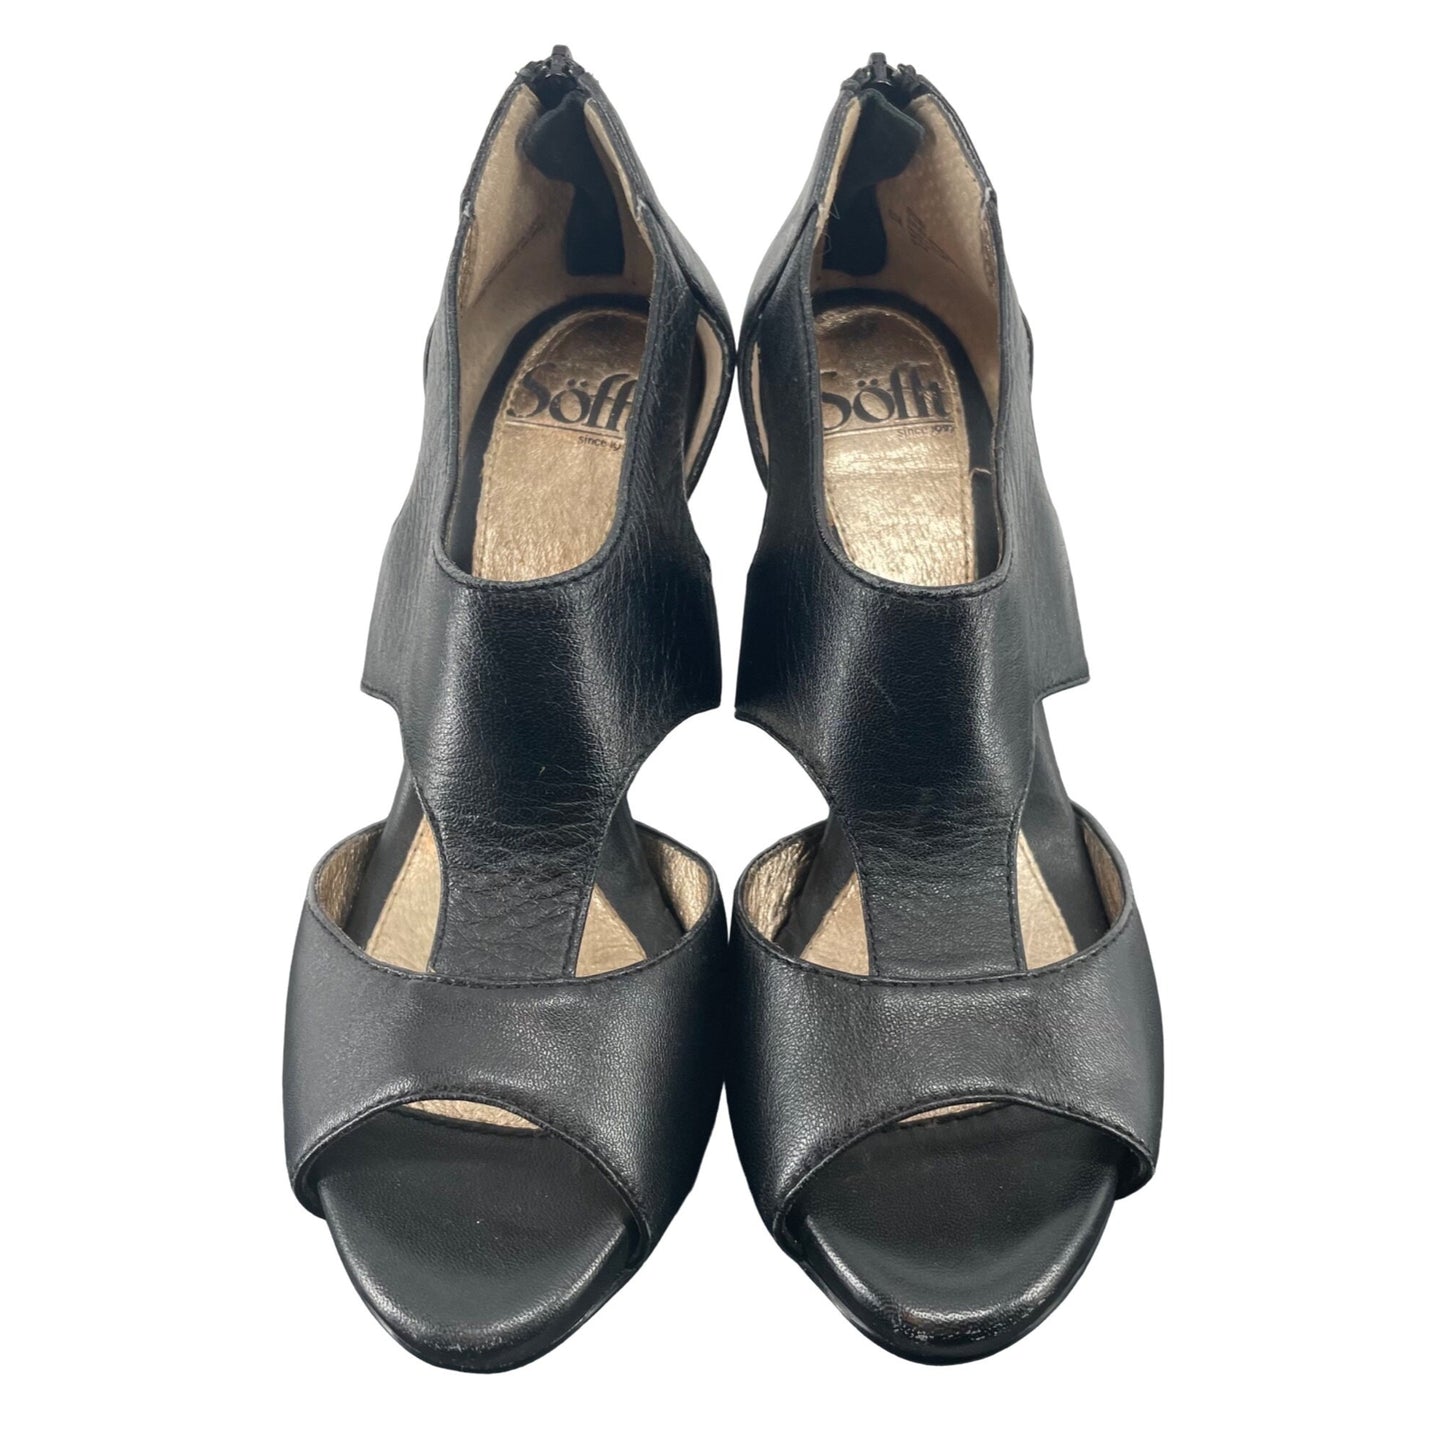 Söfft Women's Size 6 Black Leather Heeled Sandal